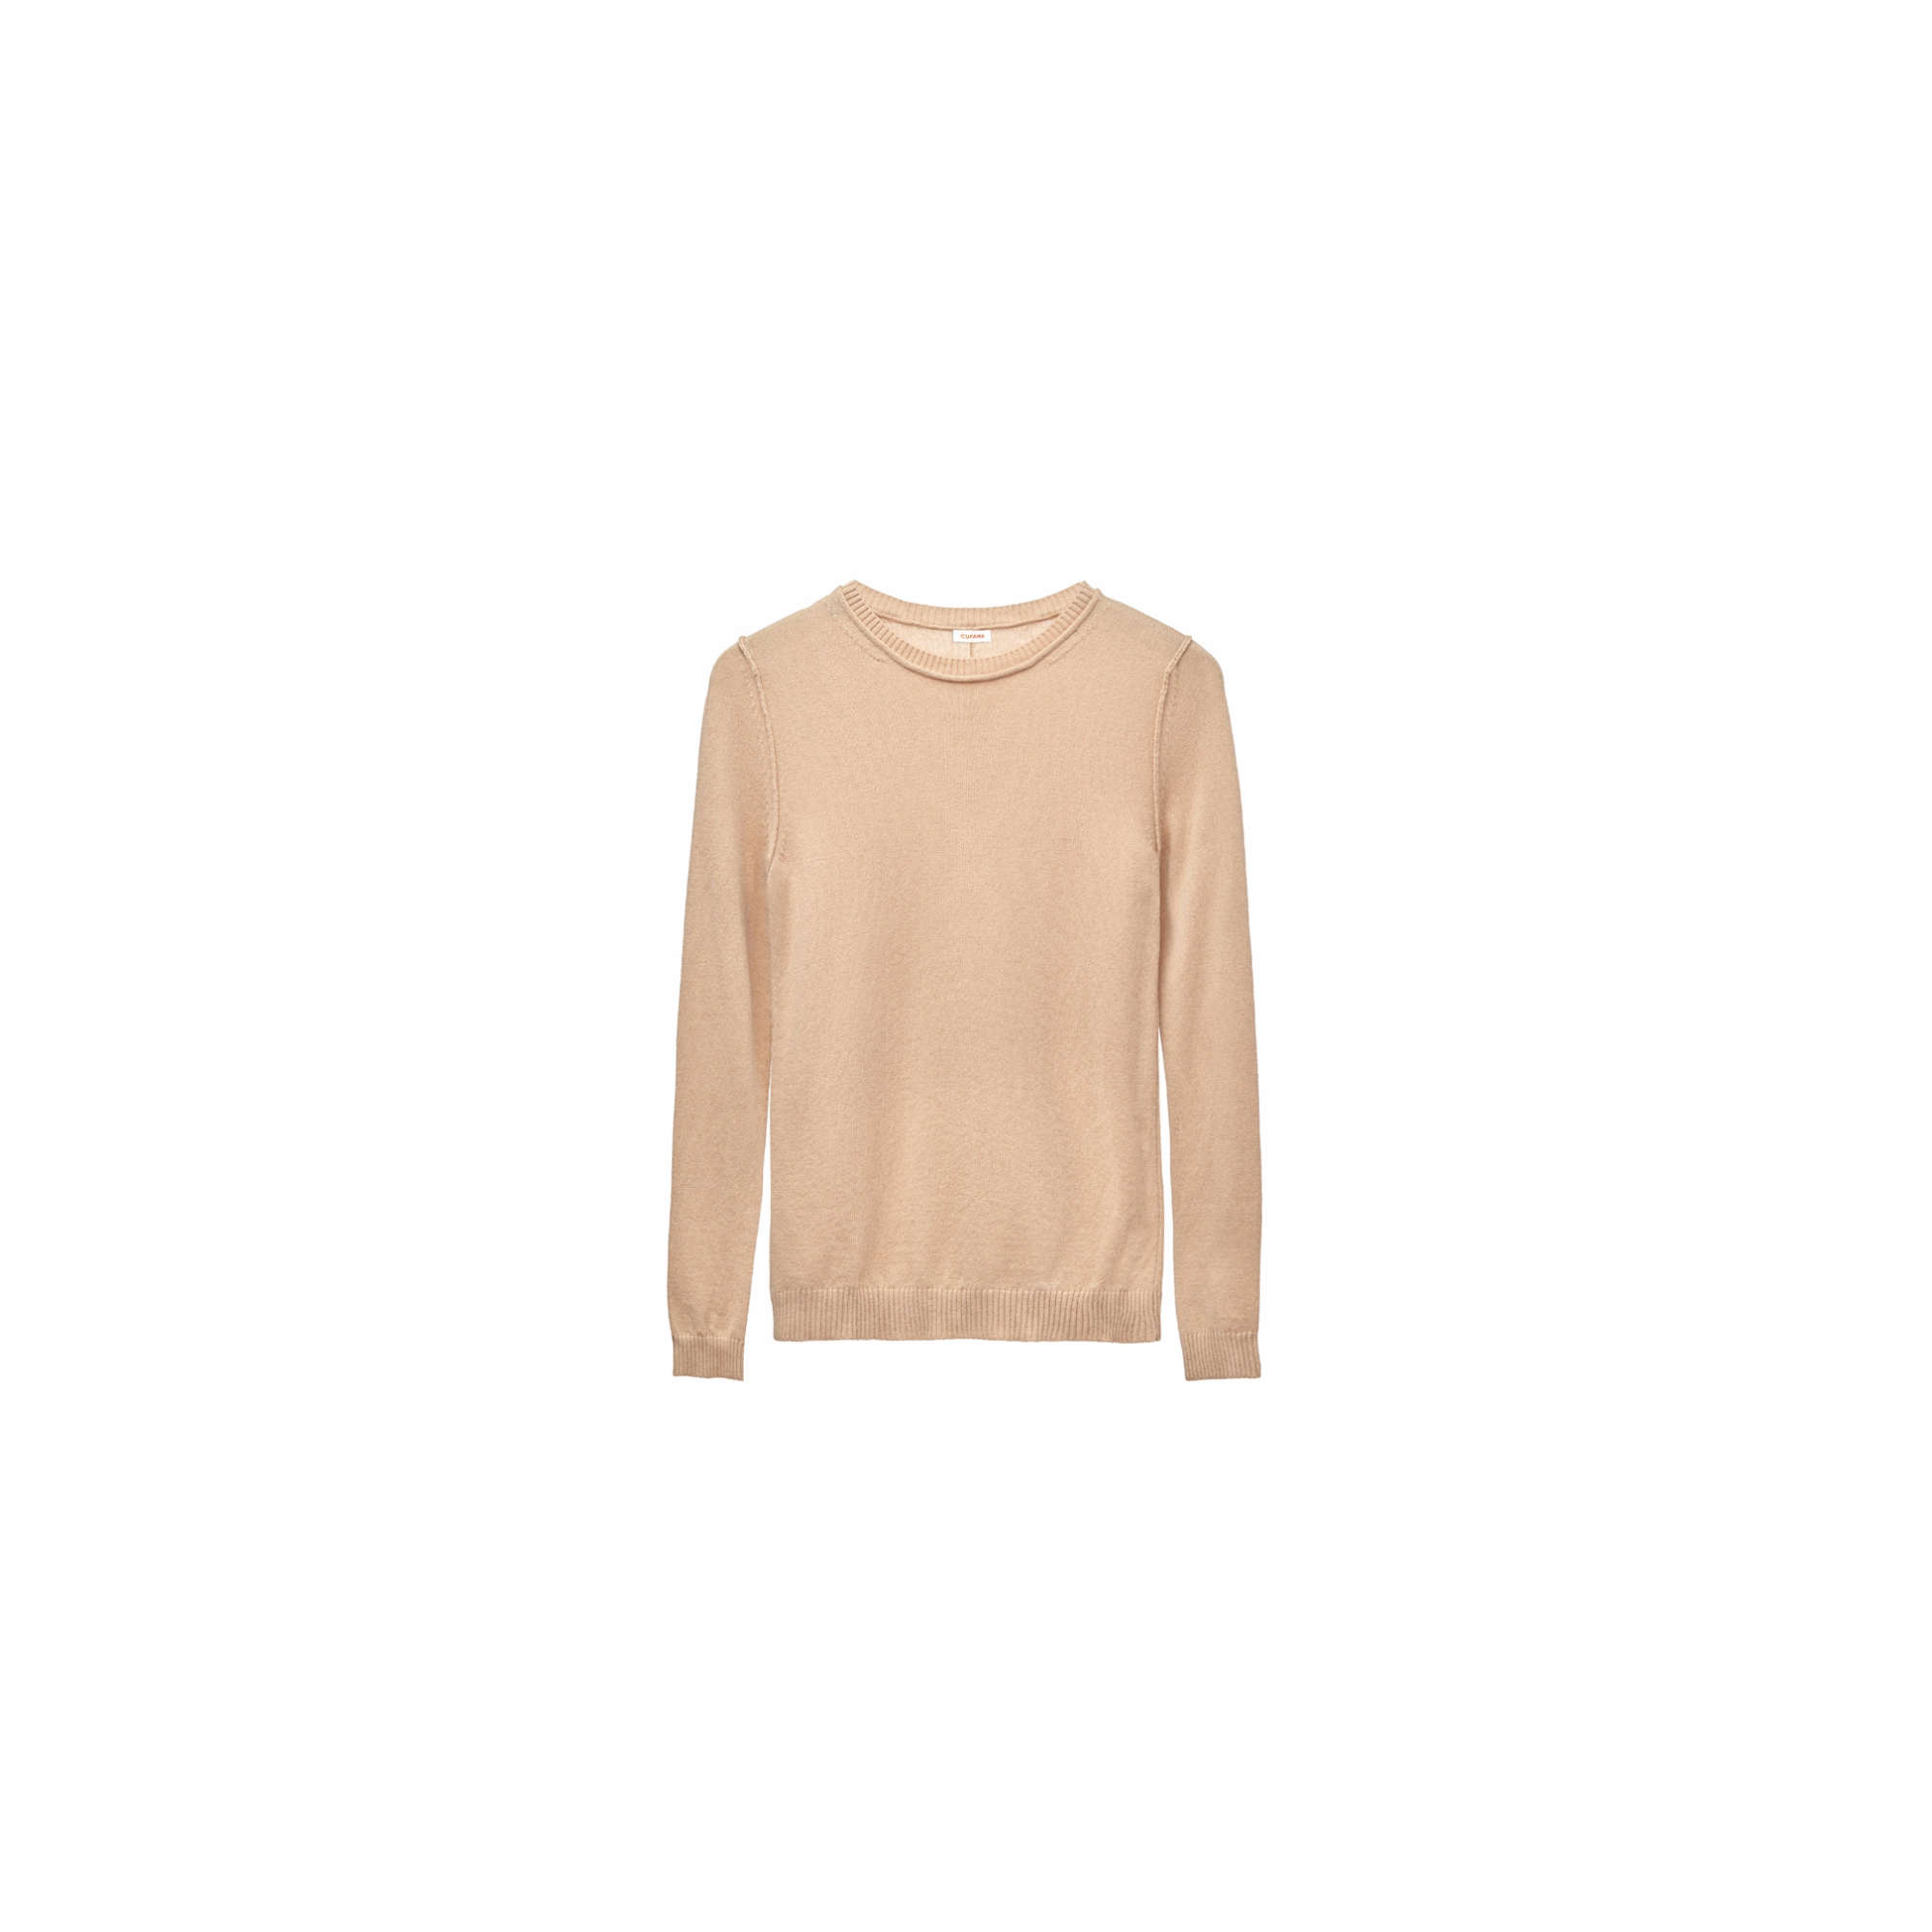 Cuyana Camel Wool Cashmere Sweater - Meghan's Mirror